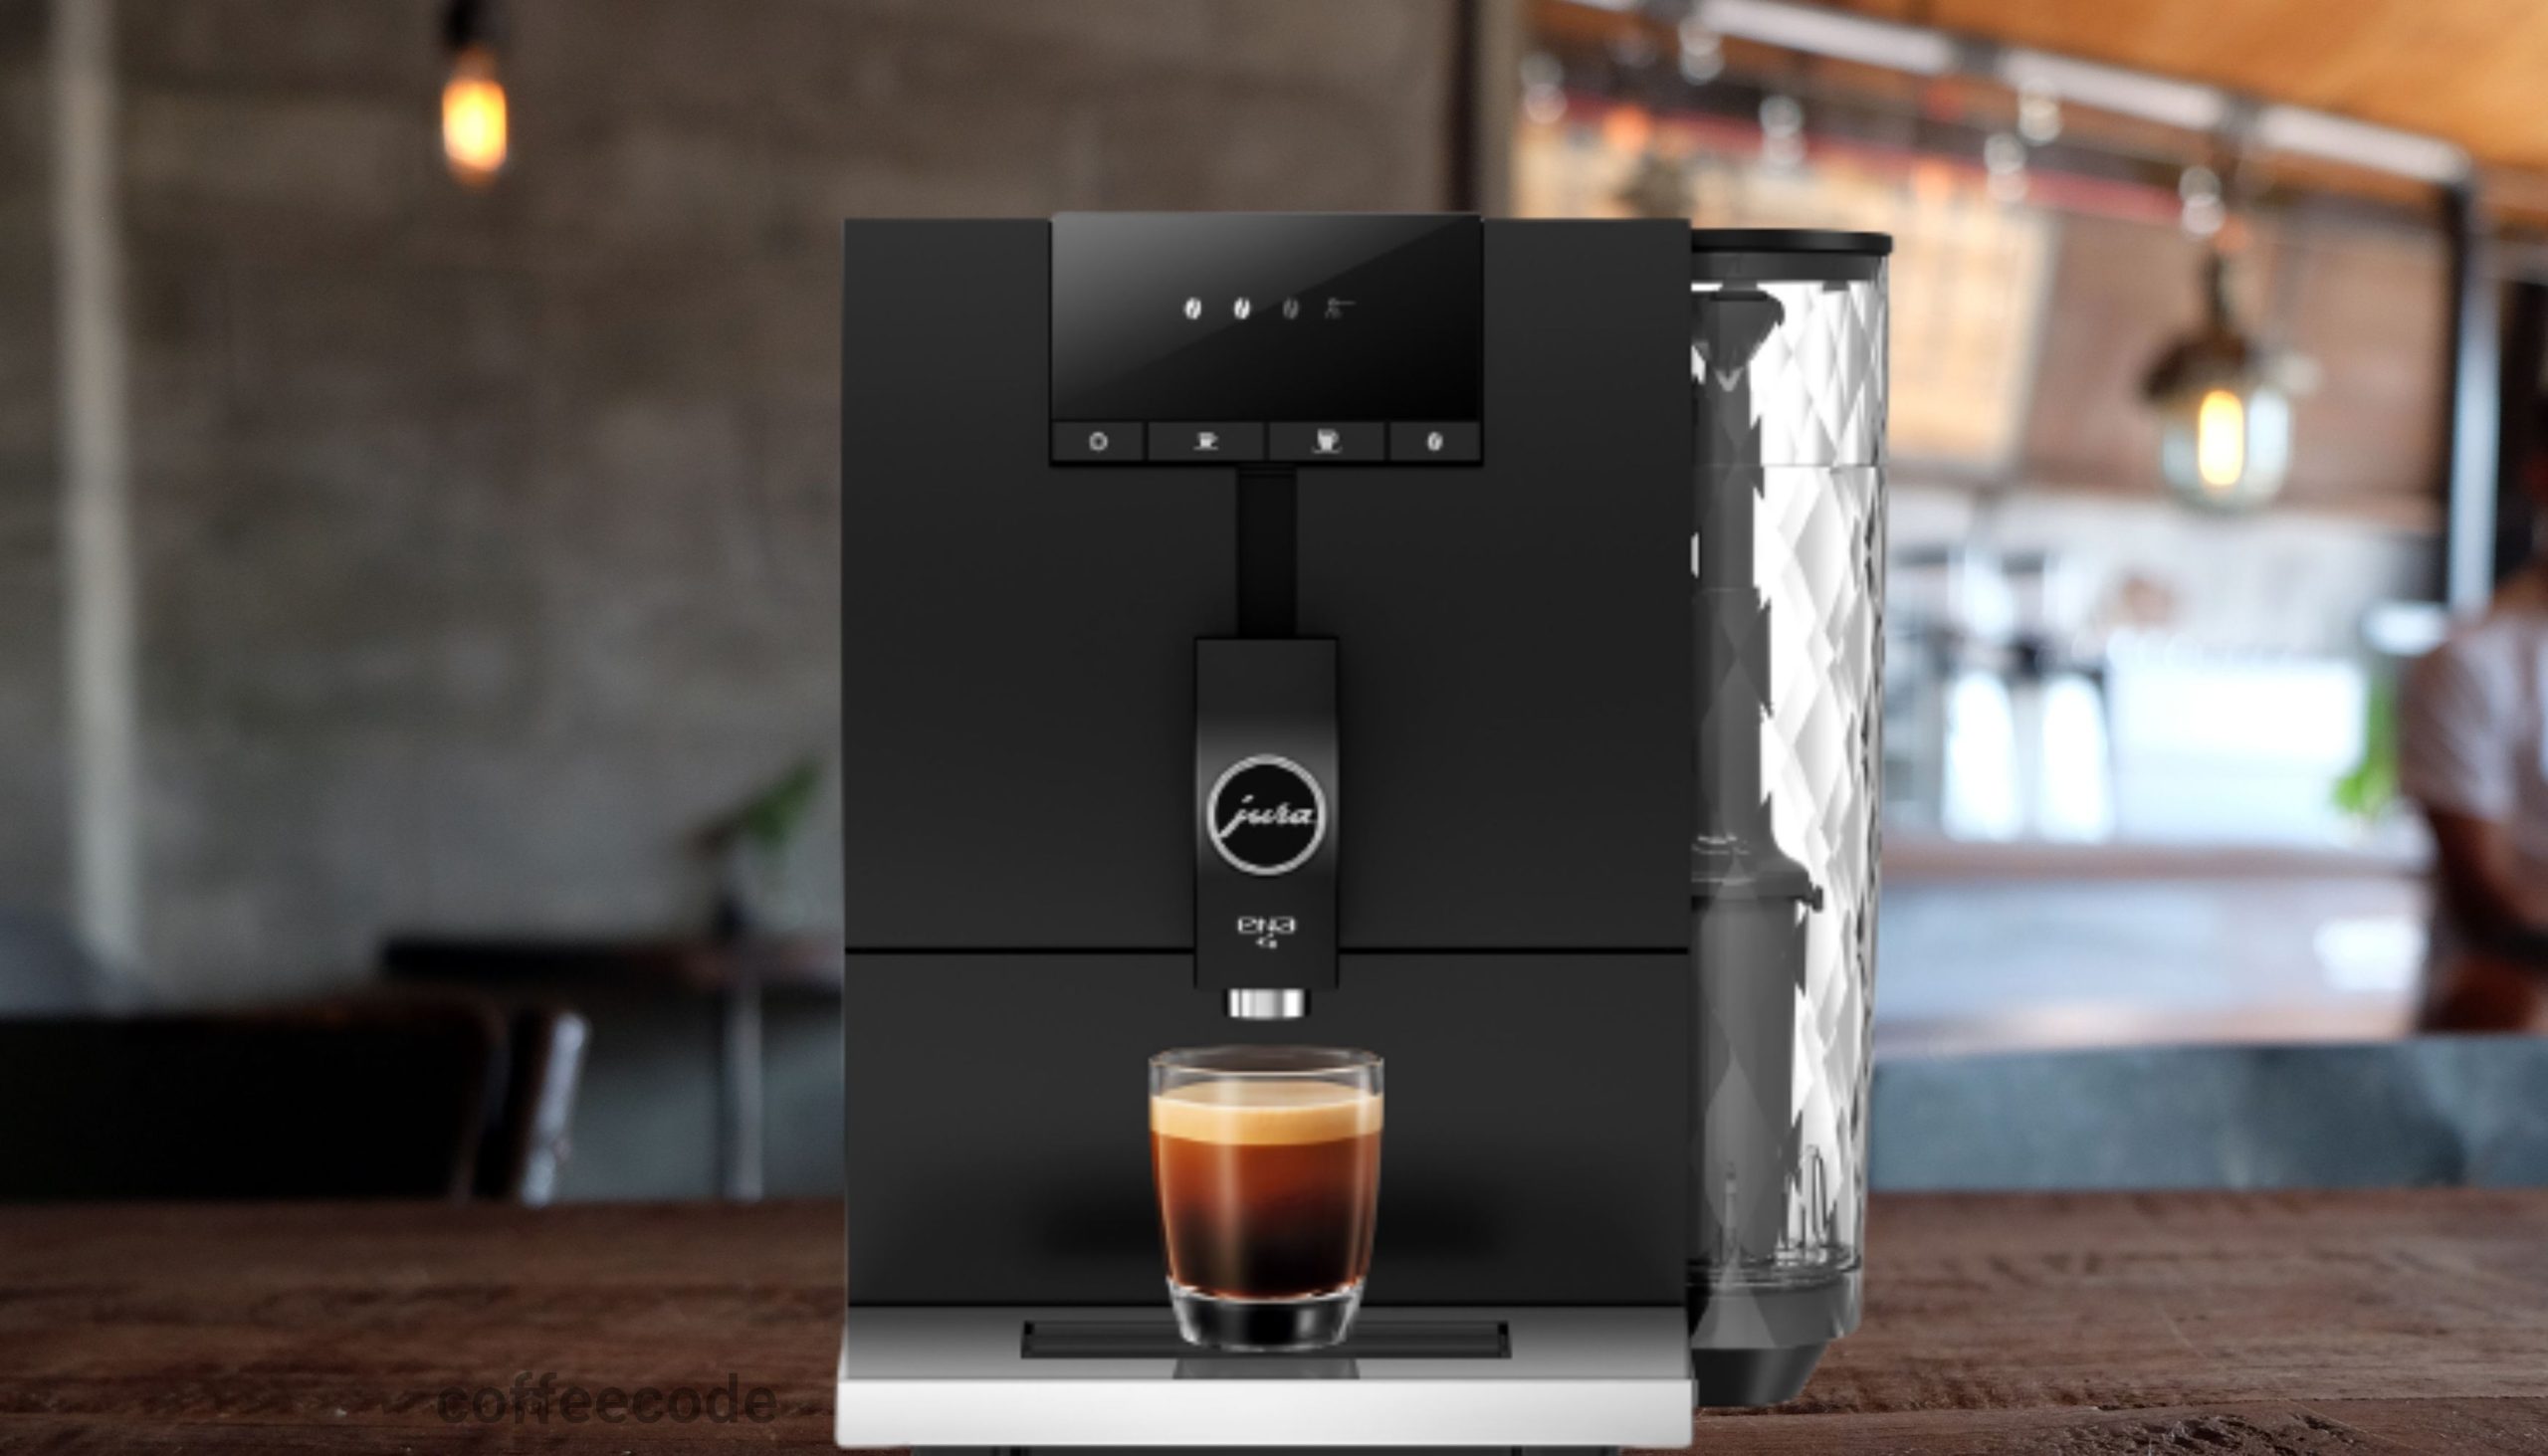 new-jura-ena-4-coffee-machine-coffeecode